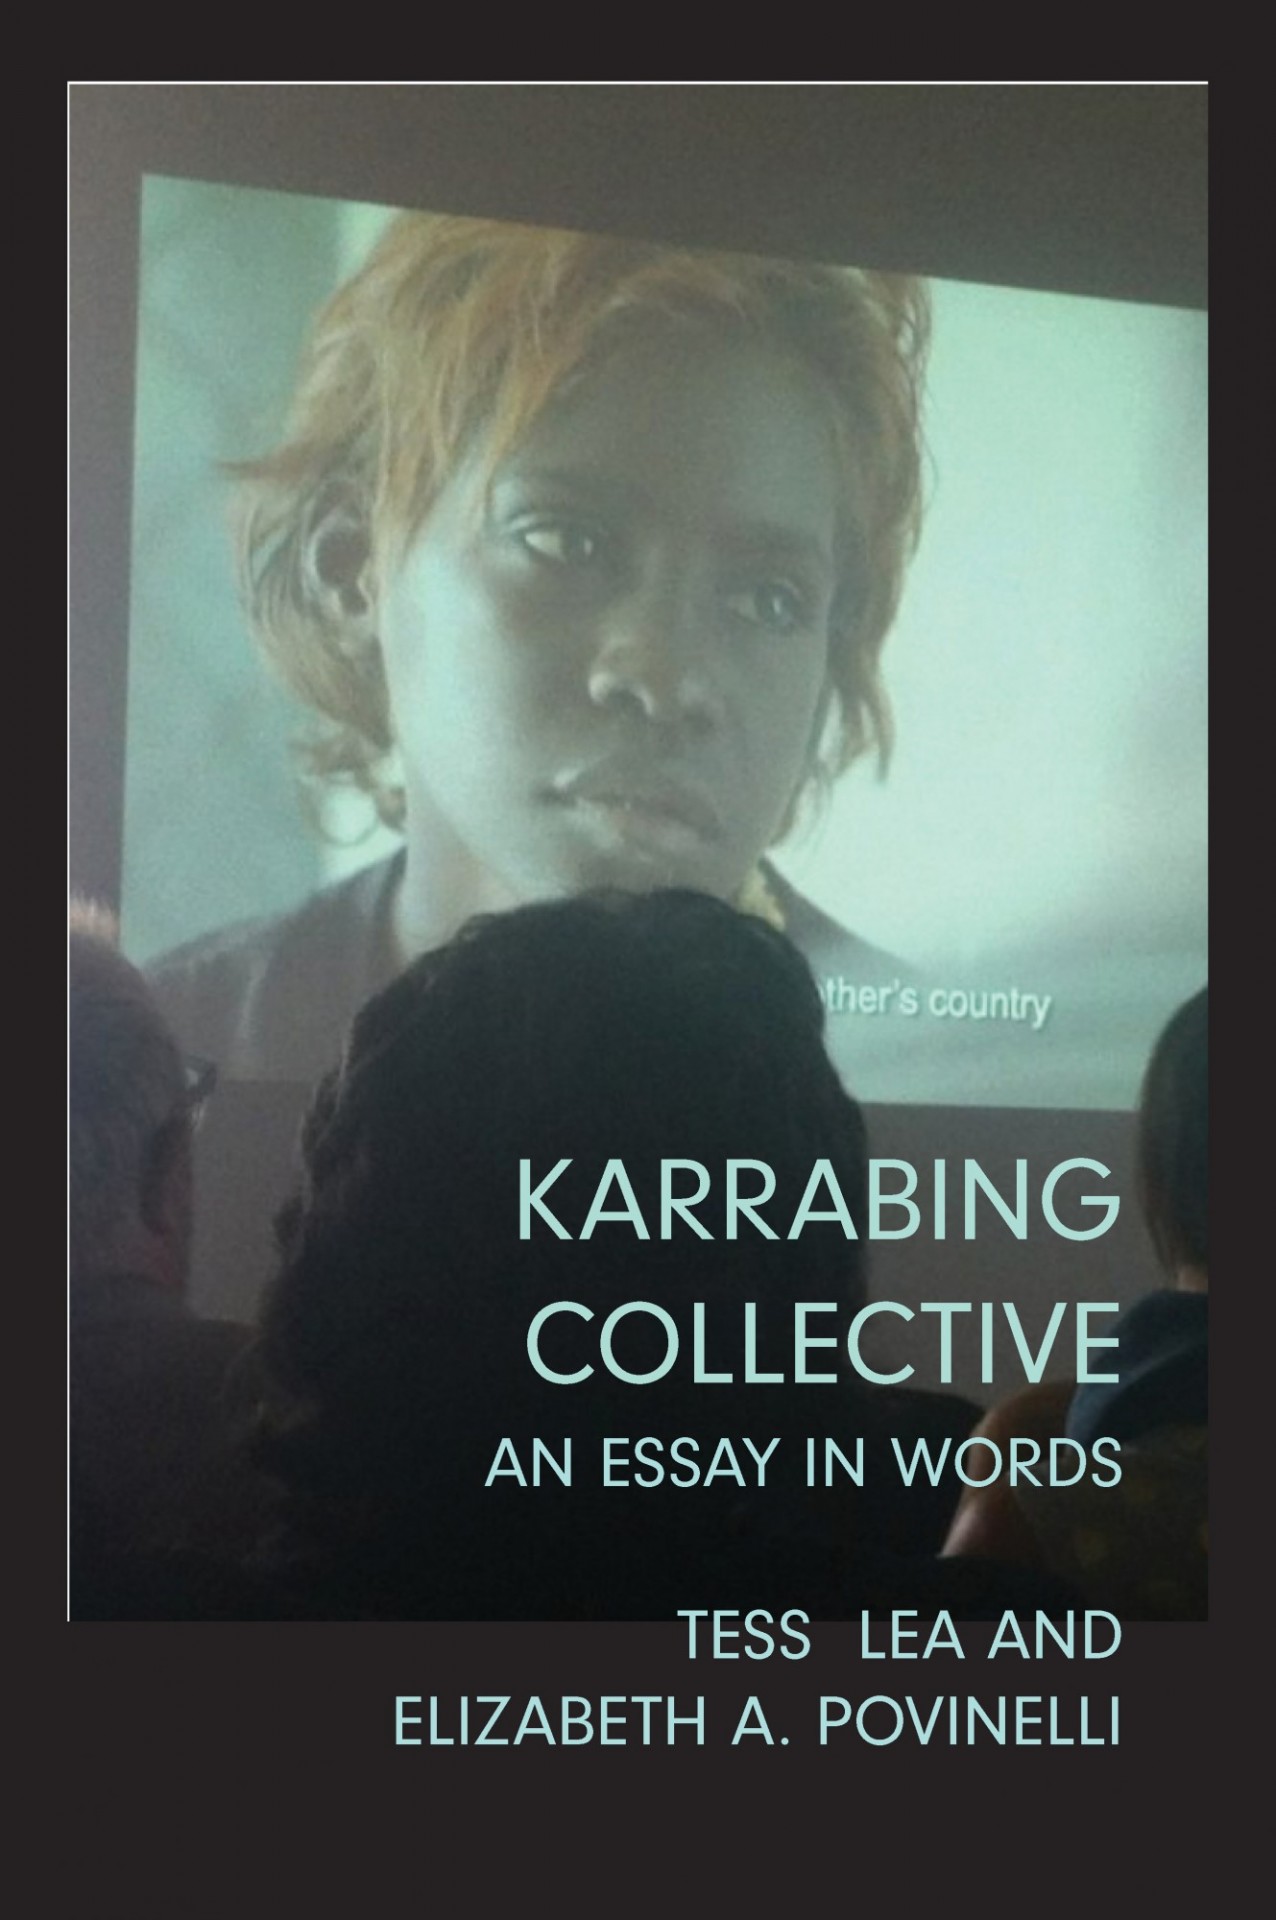 Elizabeth Povinelli, Karrabing Collective: An Essay in Words